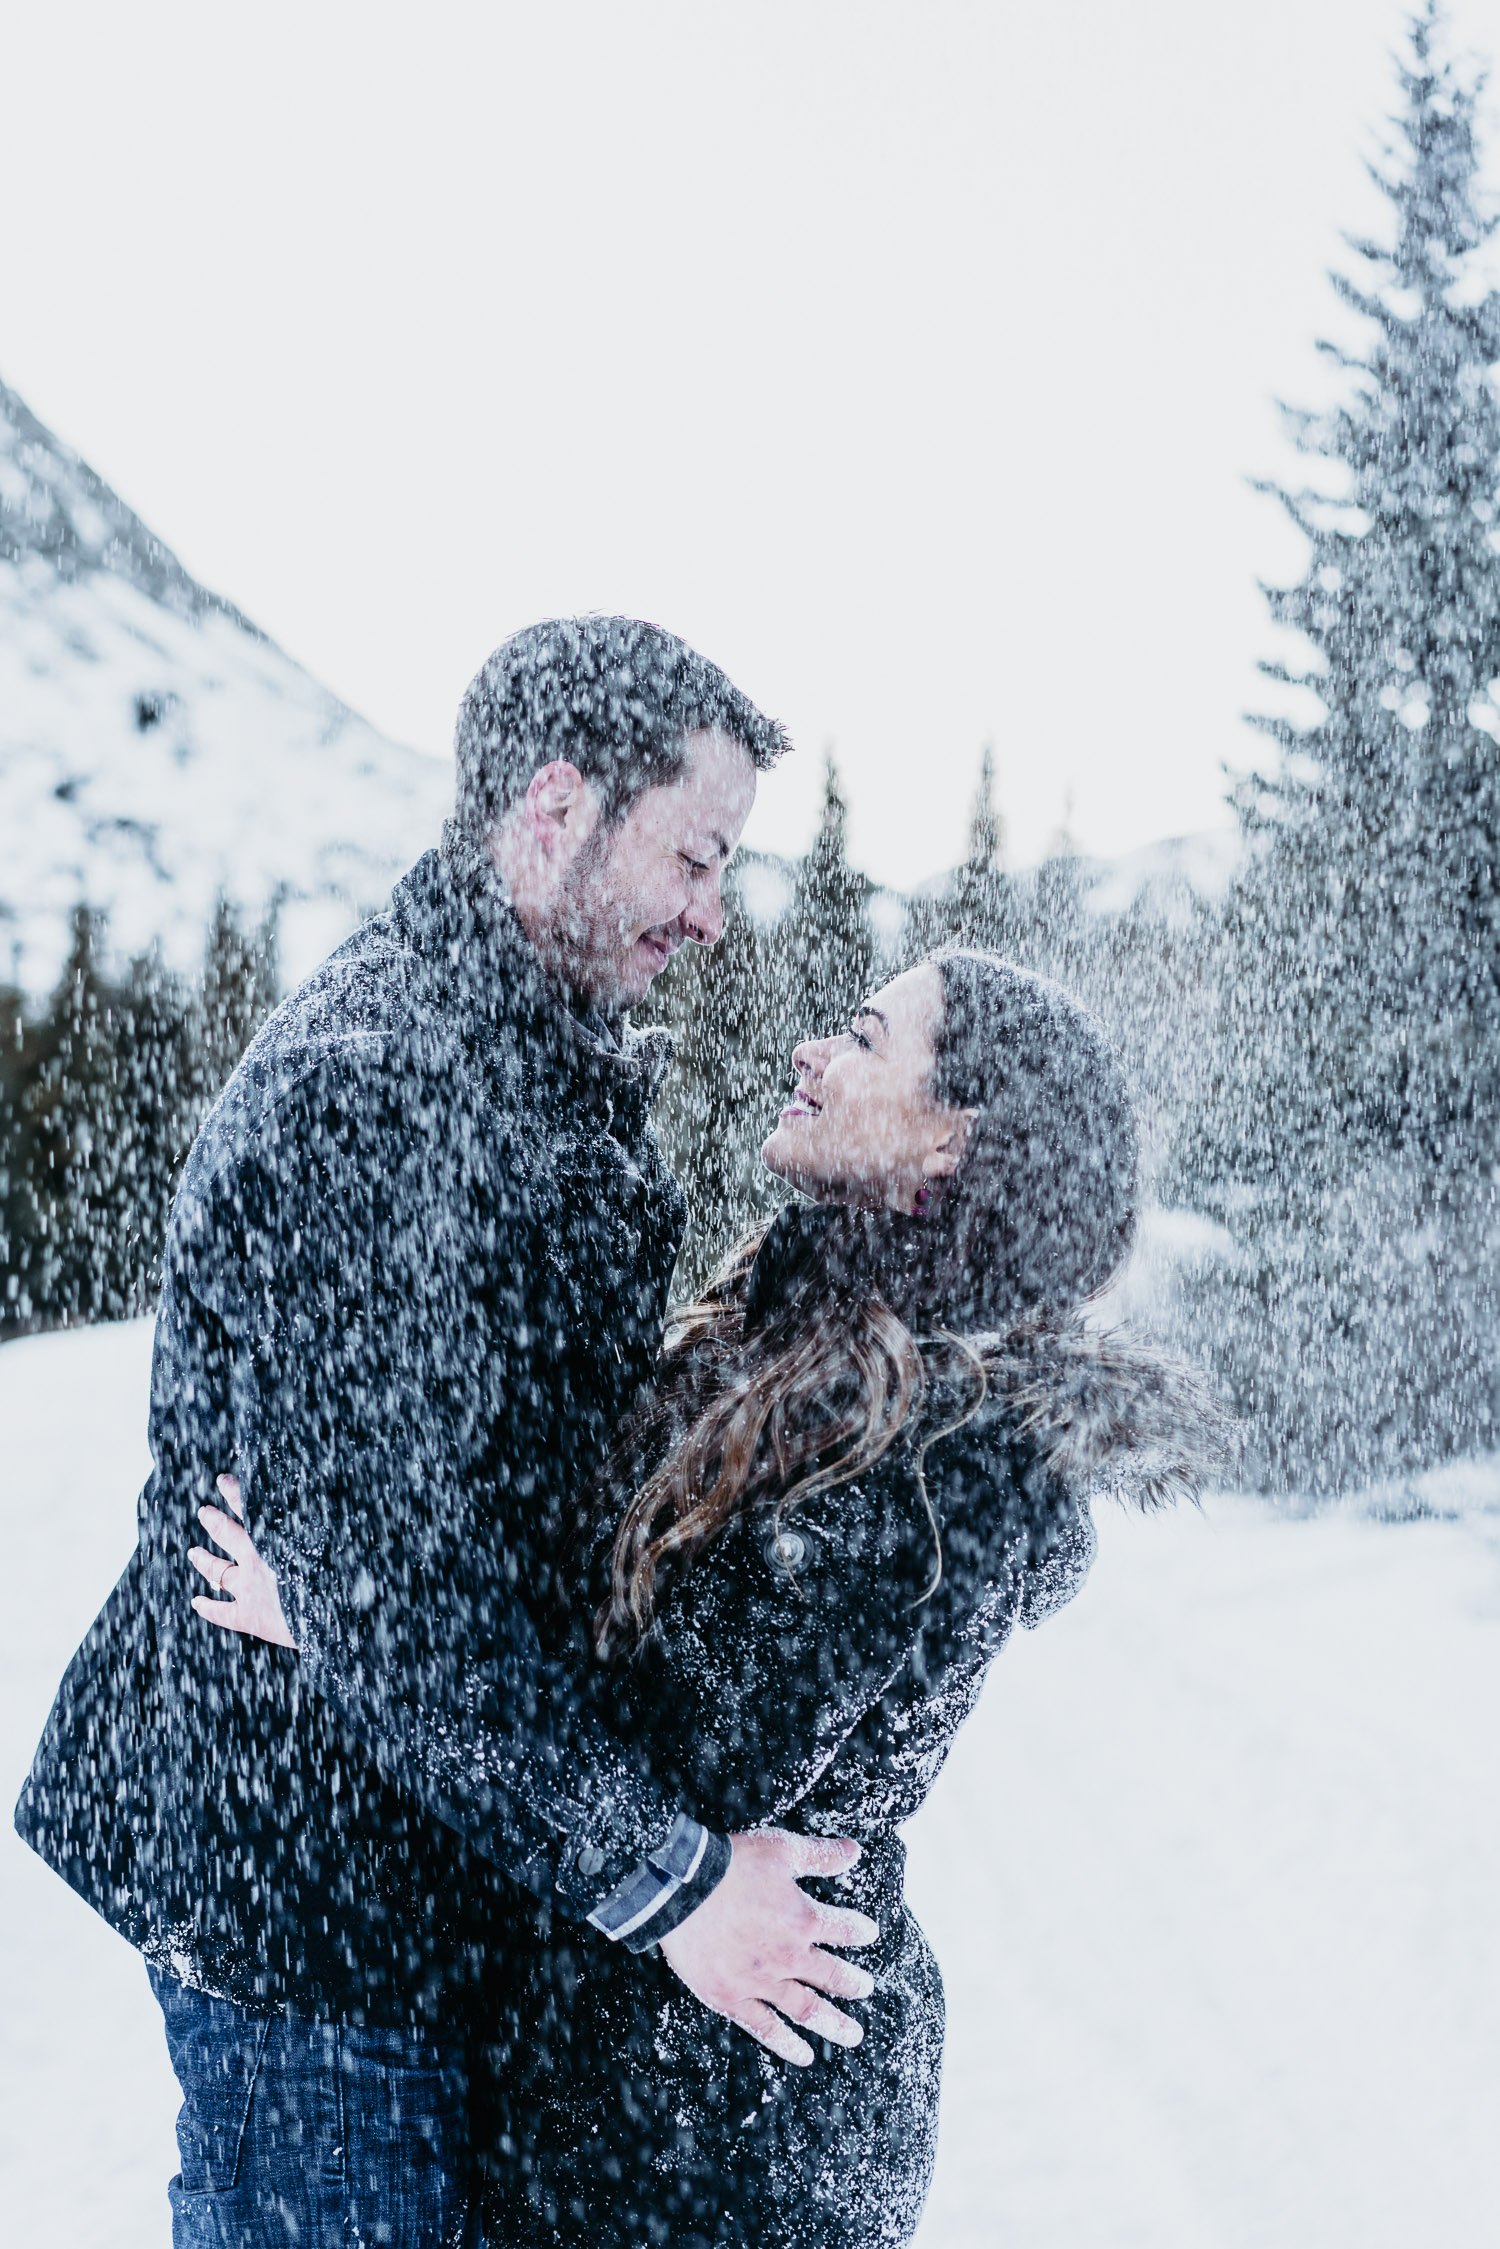 Best Of 2018 Wedding + Elopement + Couples Photography, Colorado